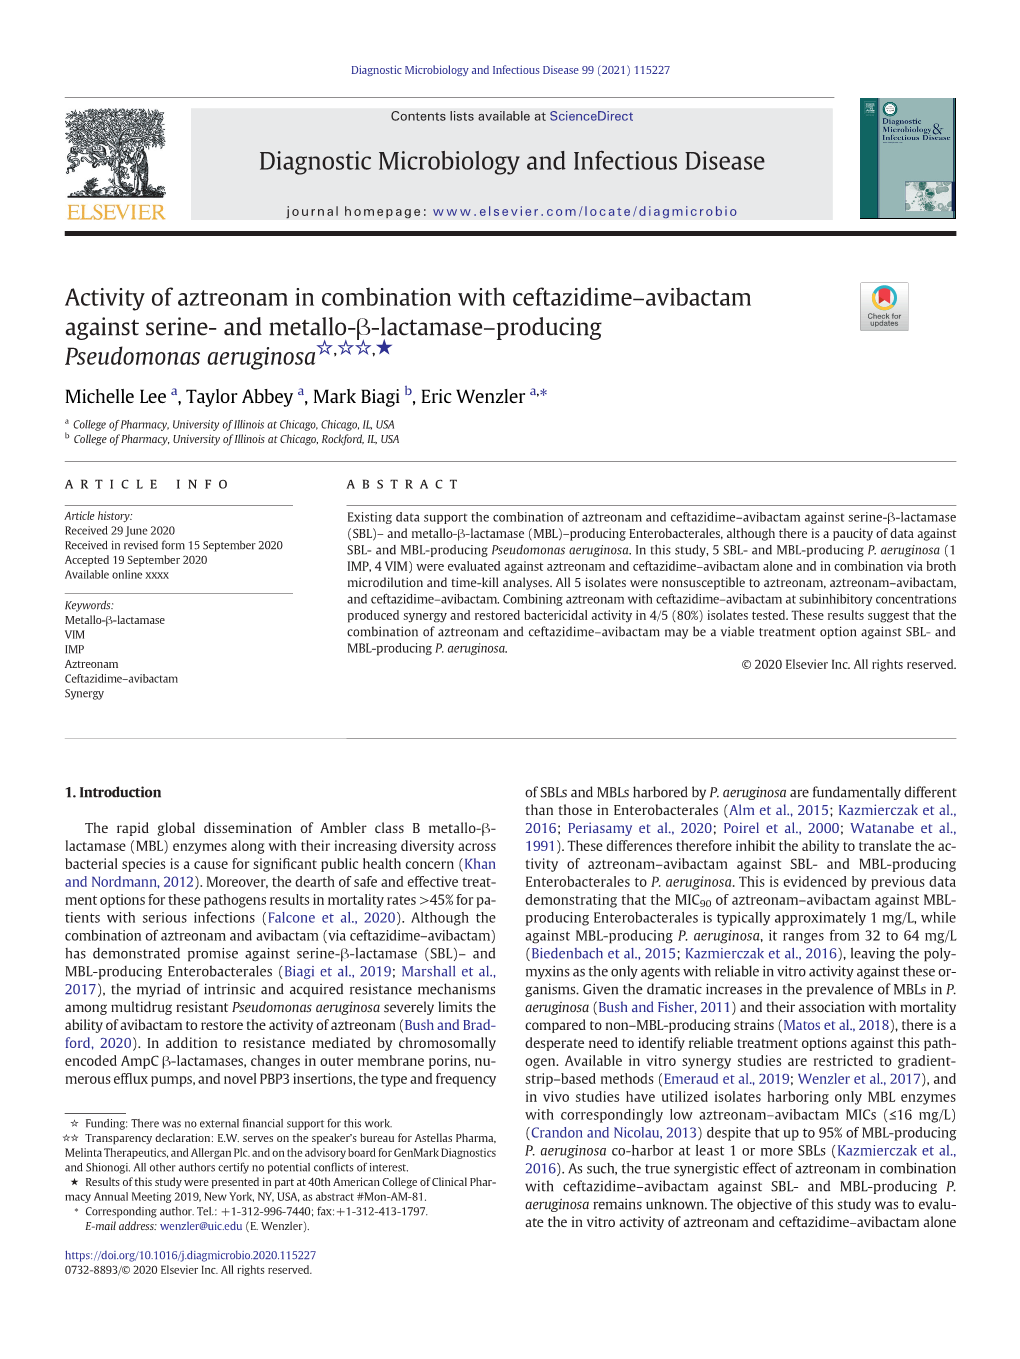 Activity of Aztreonam in Combination with Ceftazidime-Avibactam Against